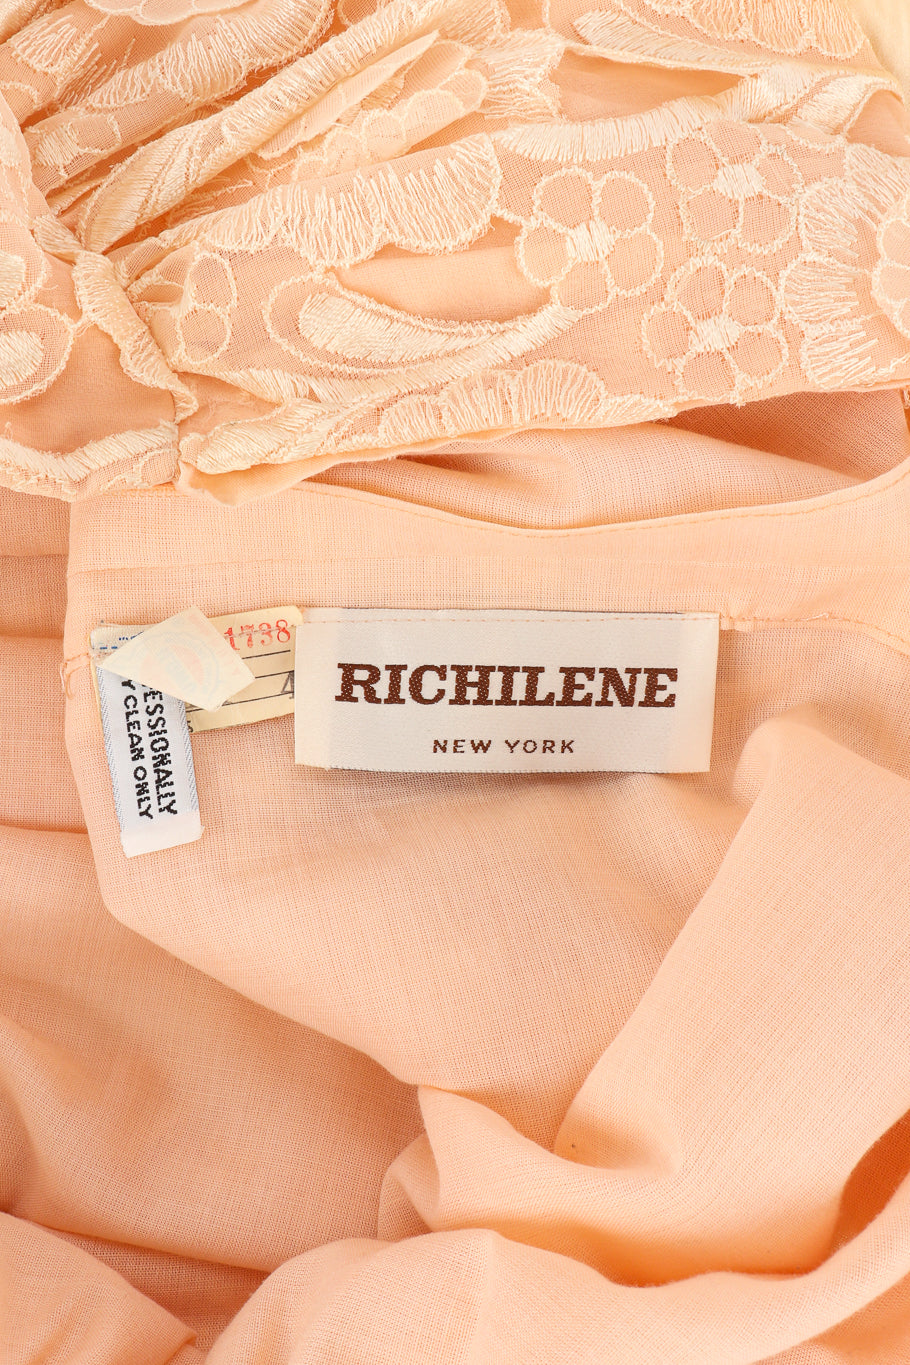 Vintage Richilene embroidered lace dress label @recessla